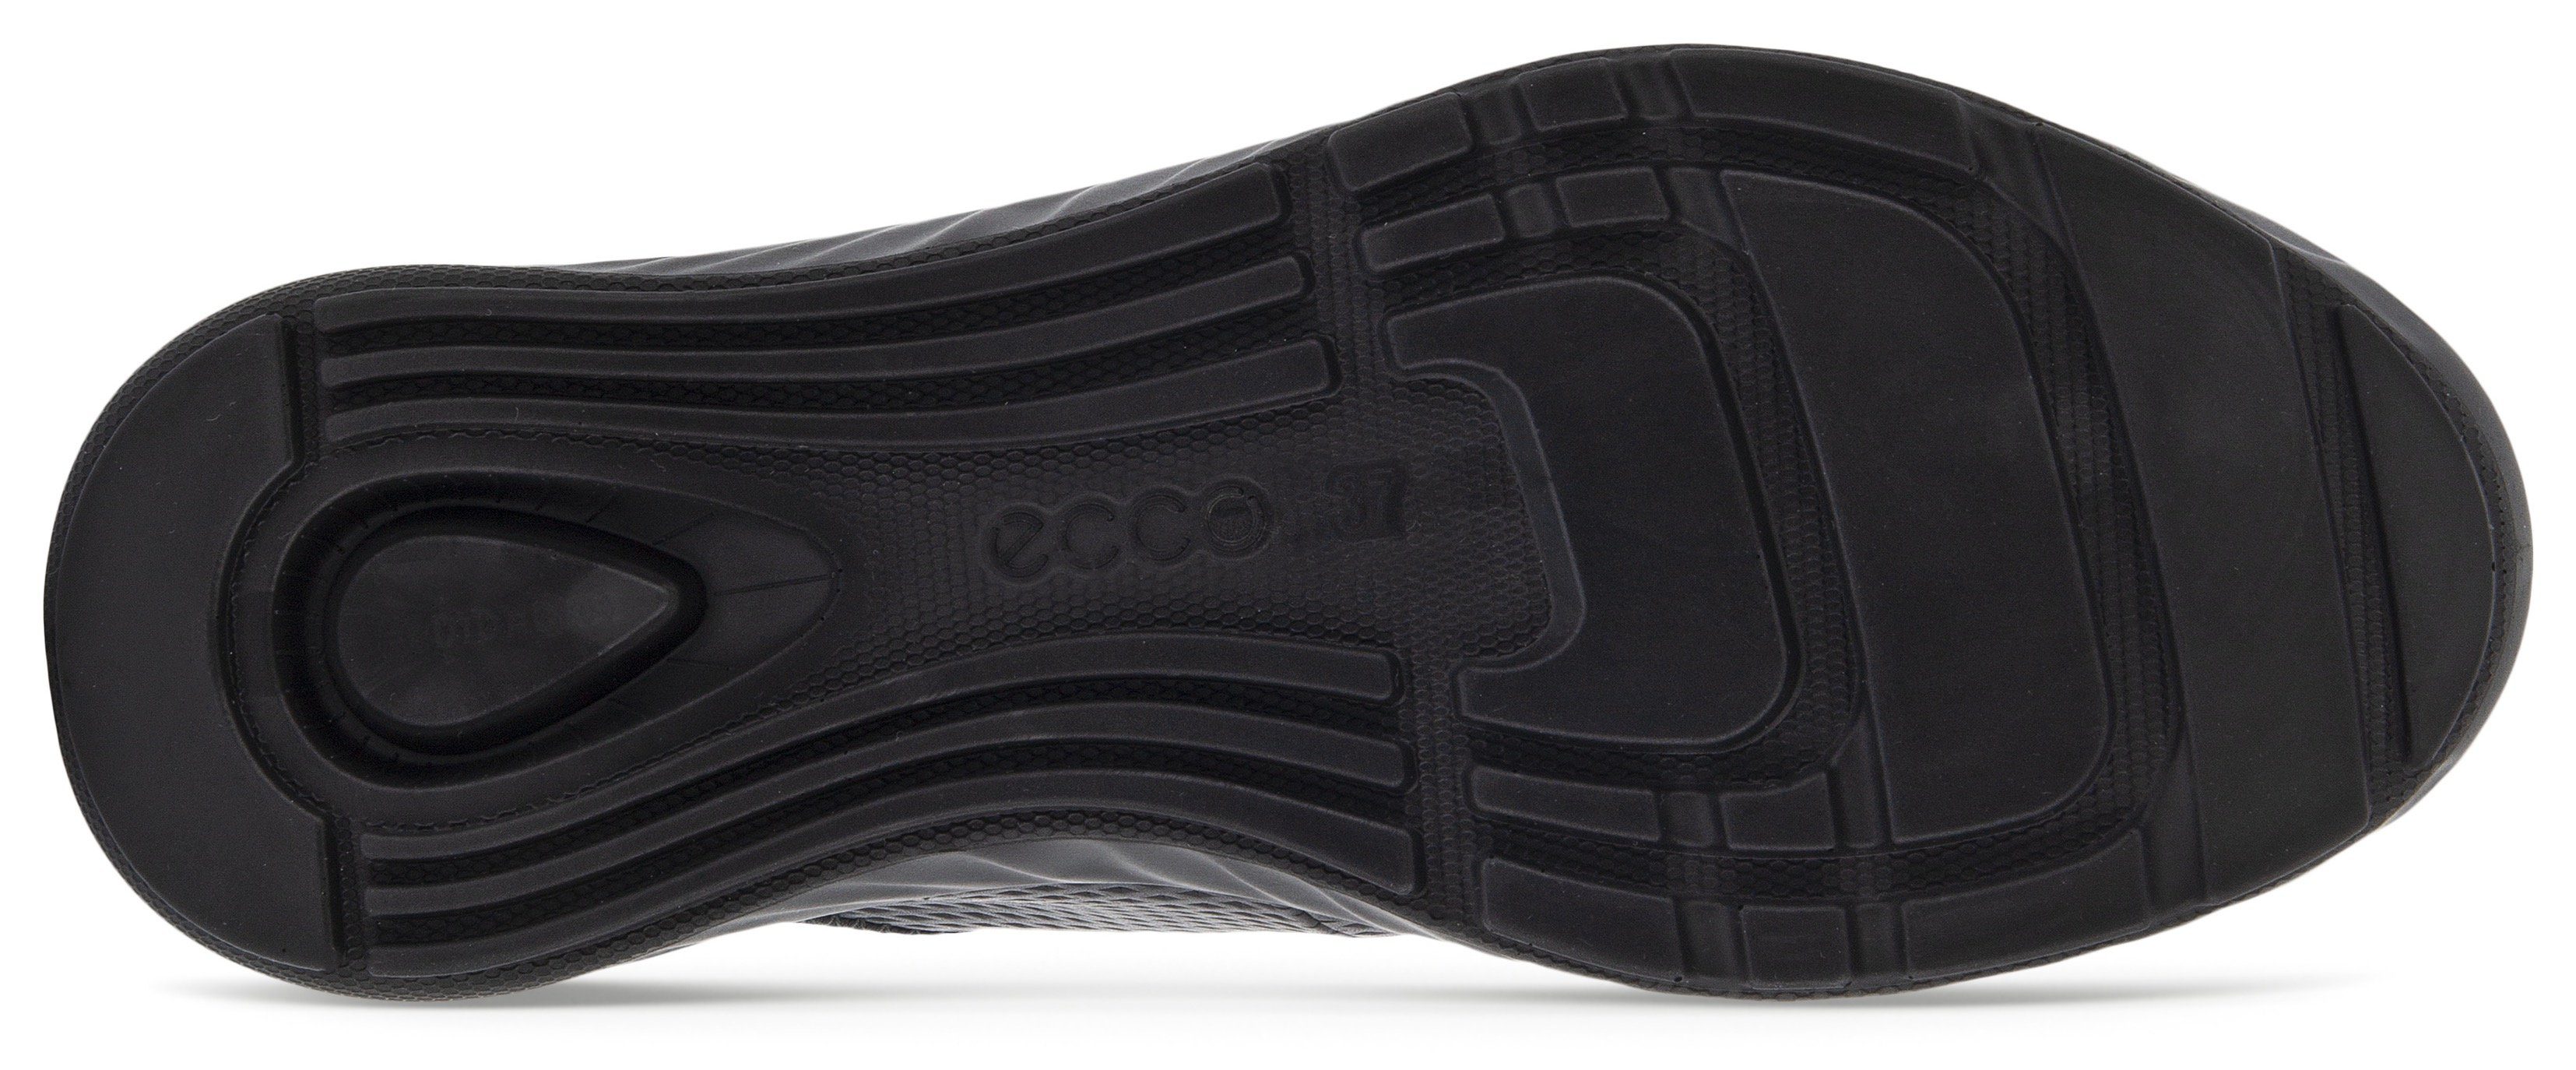 Ecco ATH-1FW Sneaker in sportivem weiß schwarz Look